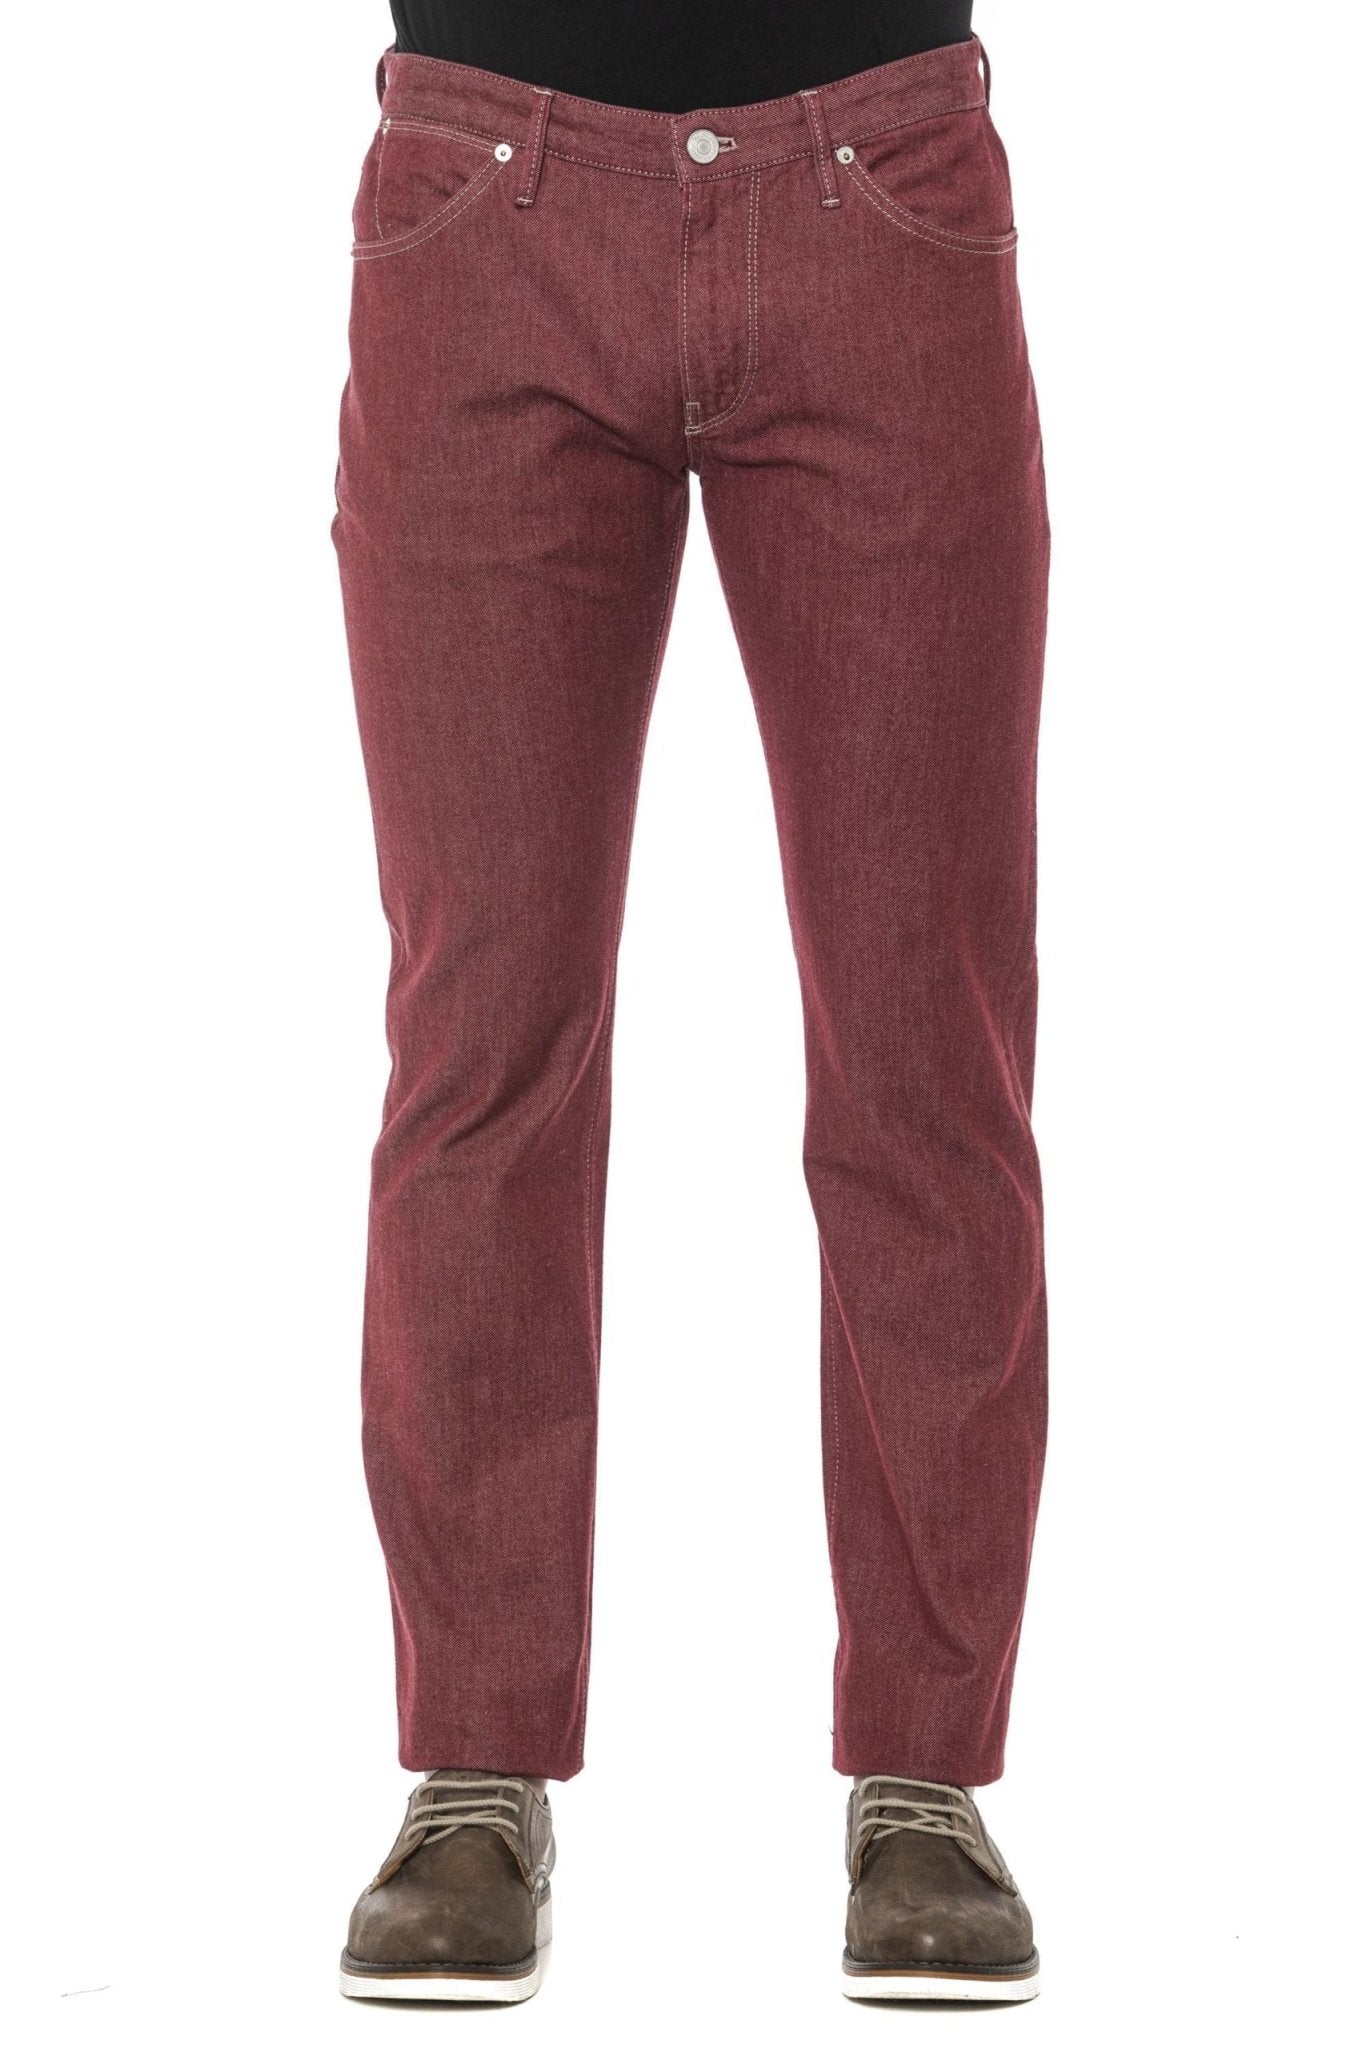 PT Torino Burgundy Cotton Jeans & Pant - Fizigo